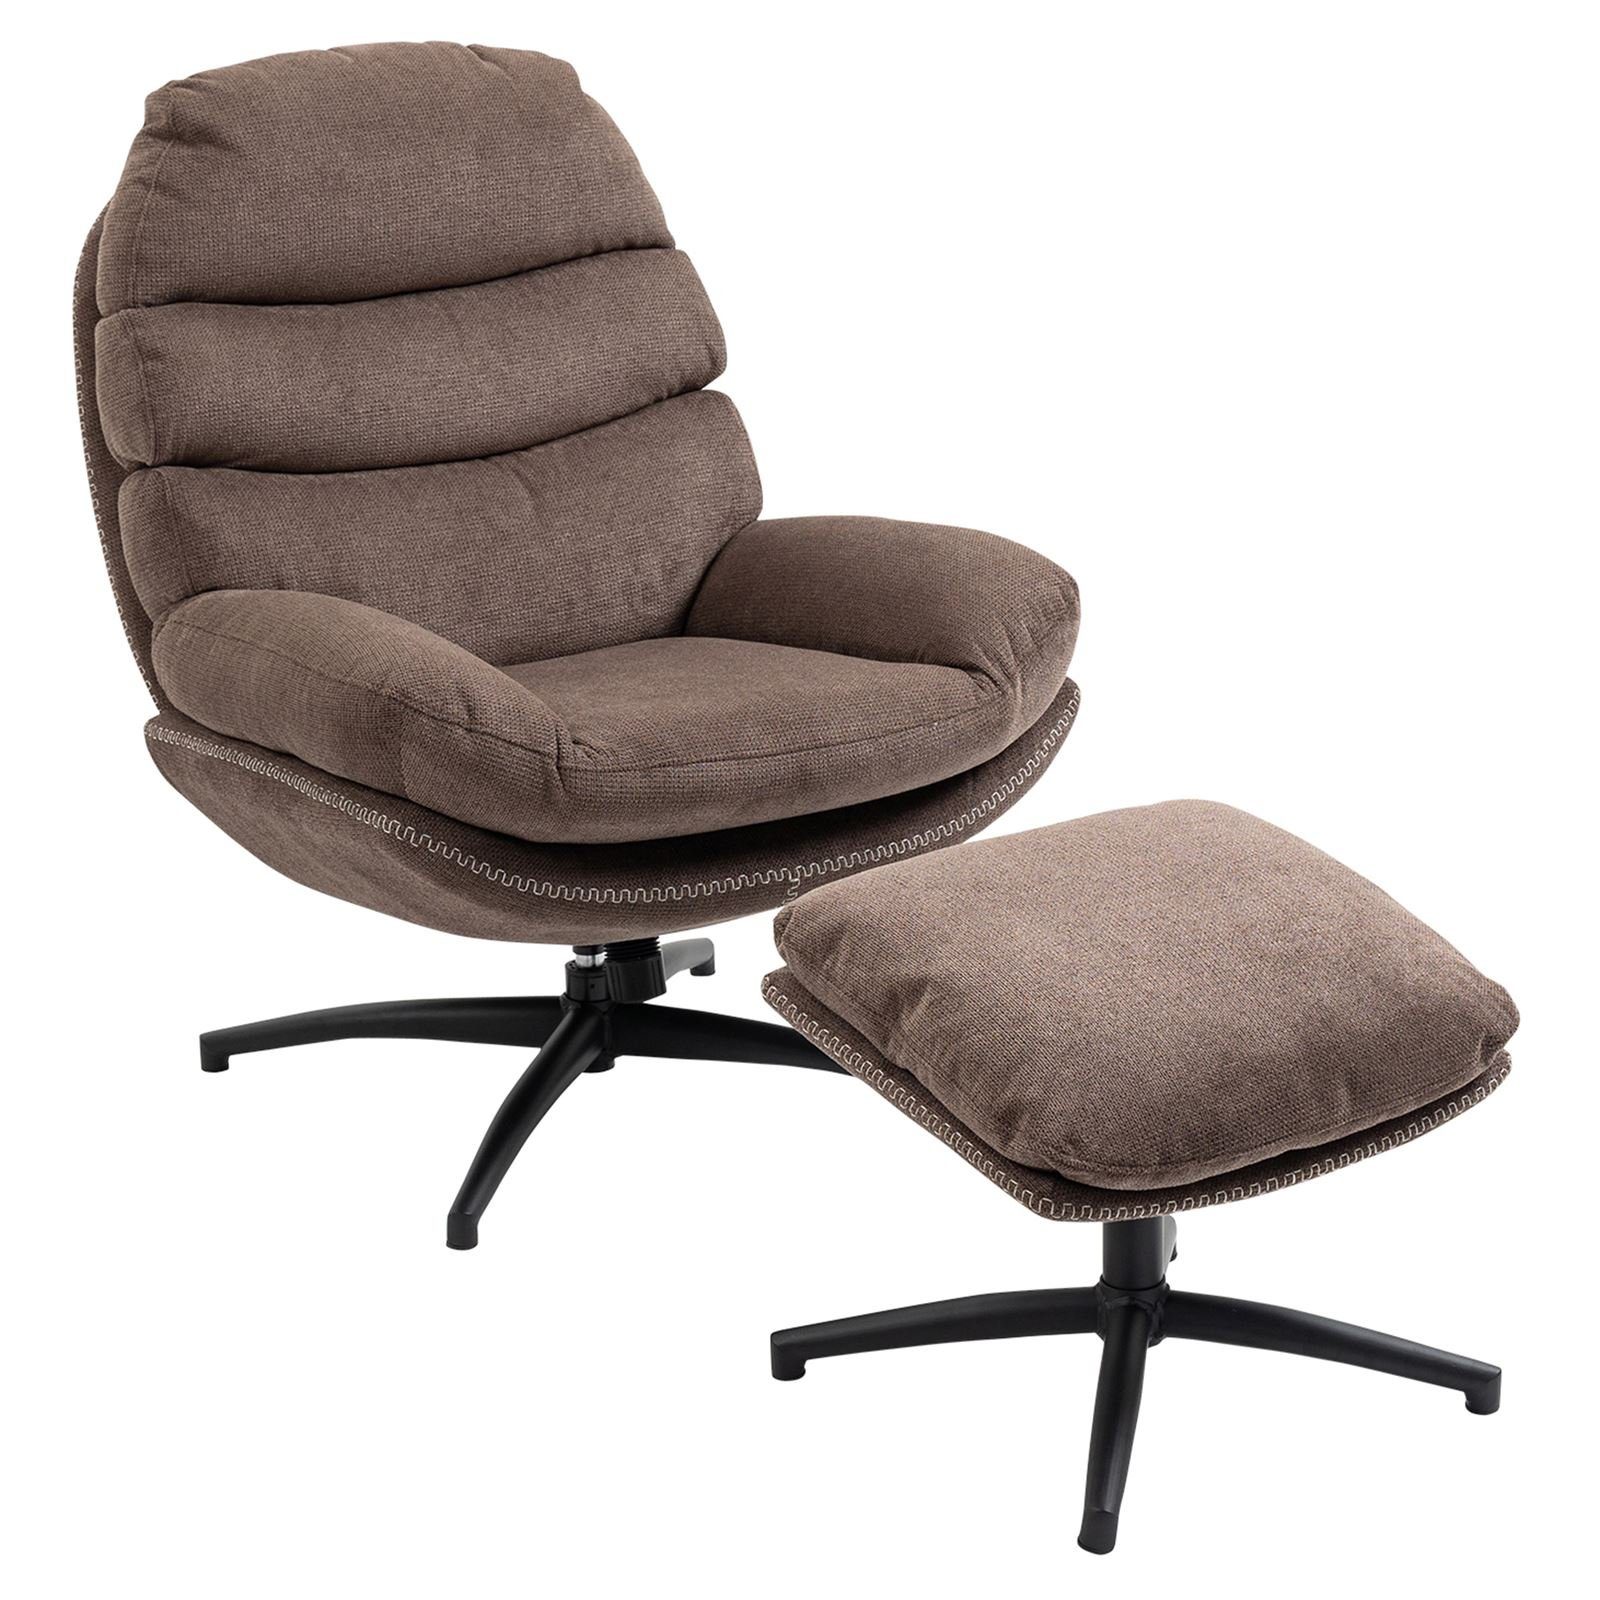 CARO-Möbel Relaxsessel, Relaxsessel mit Hocker Polstersessel Wohnzimmer Metall Stoff Modern braun